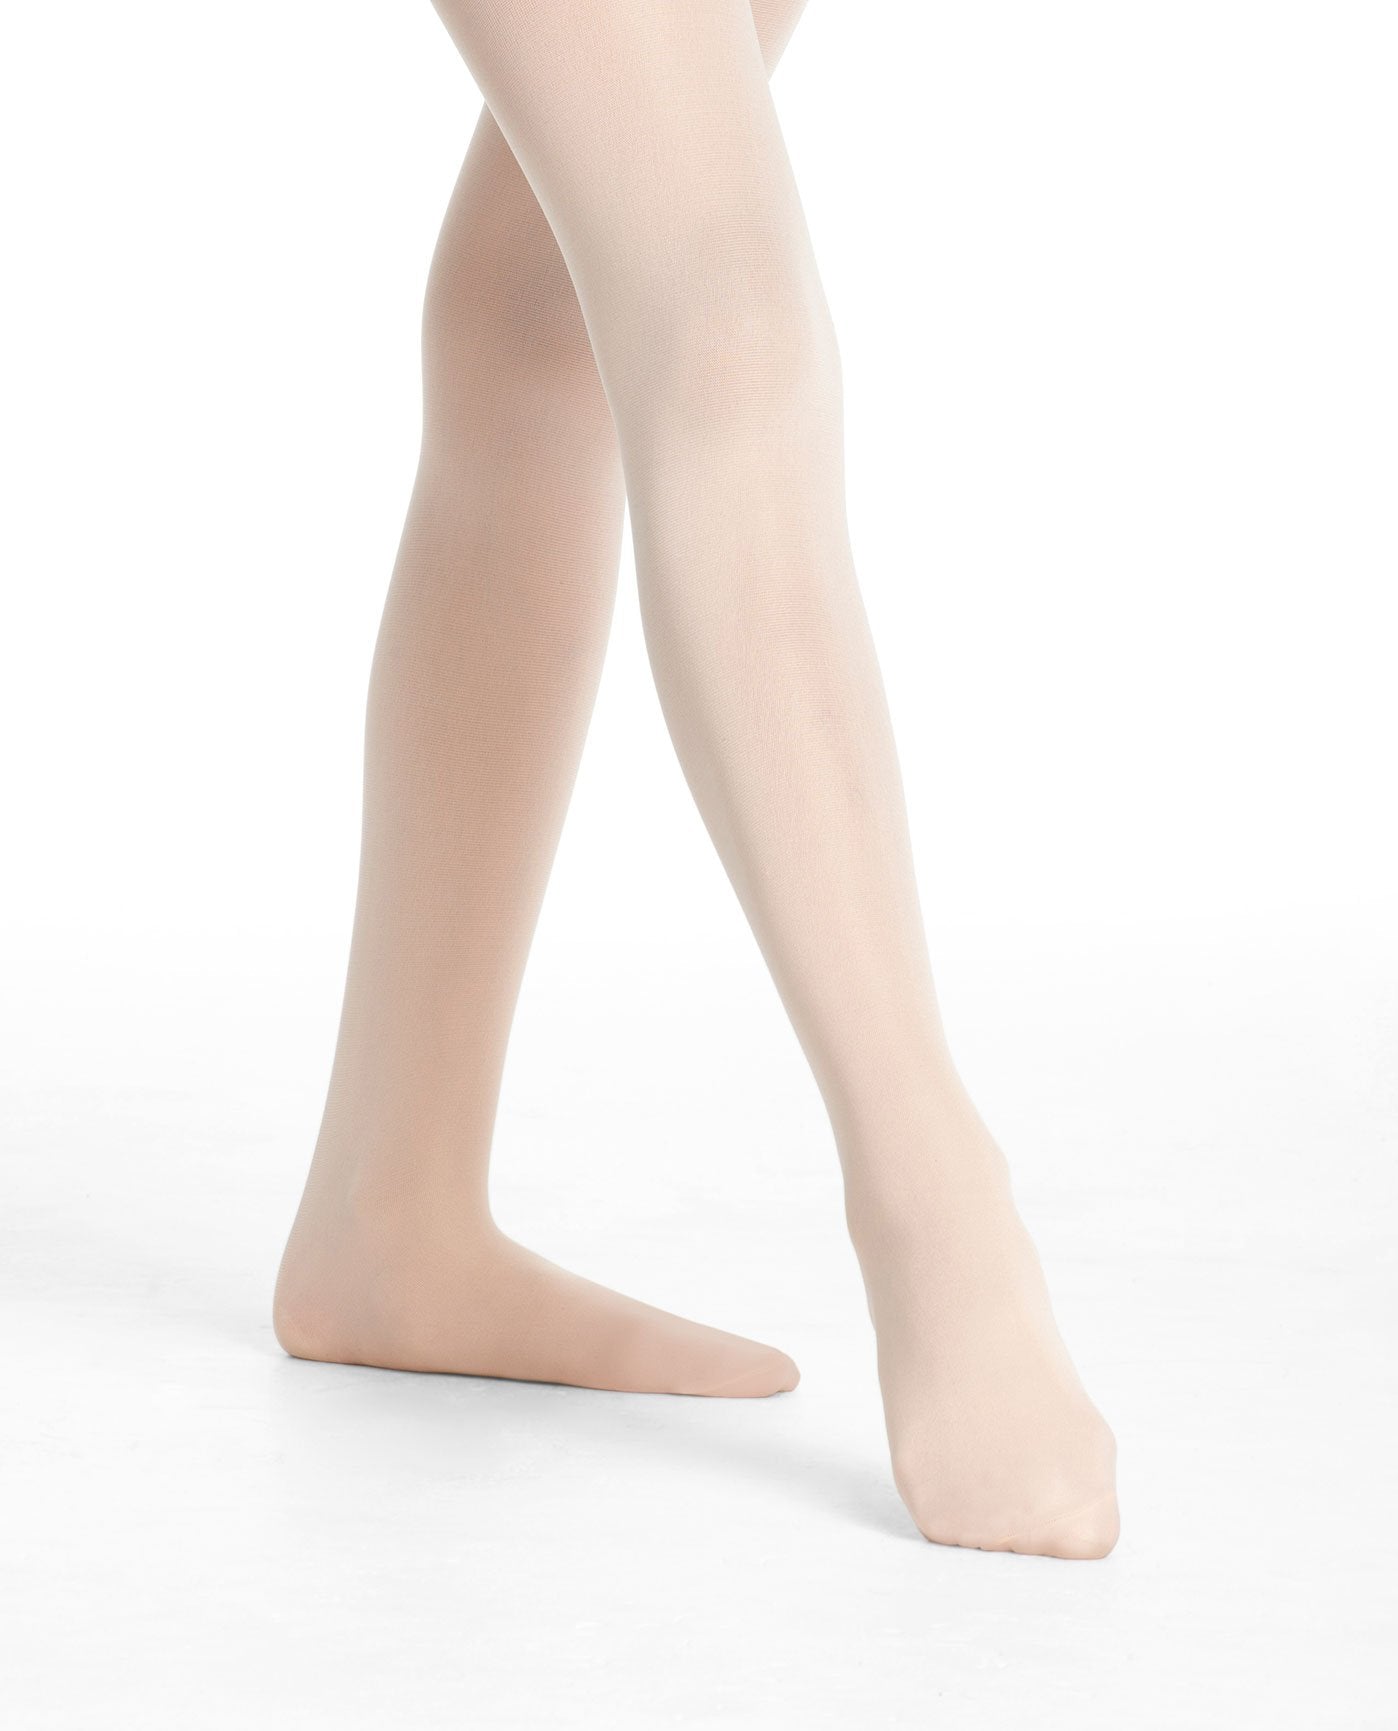 Danskin Now Girls' Stirrup Dance Leggings, Size XS(4-5) 